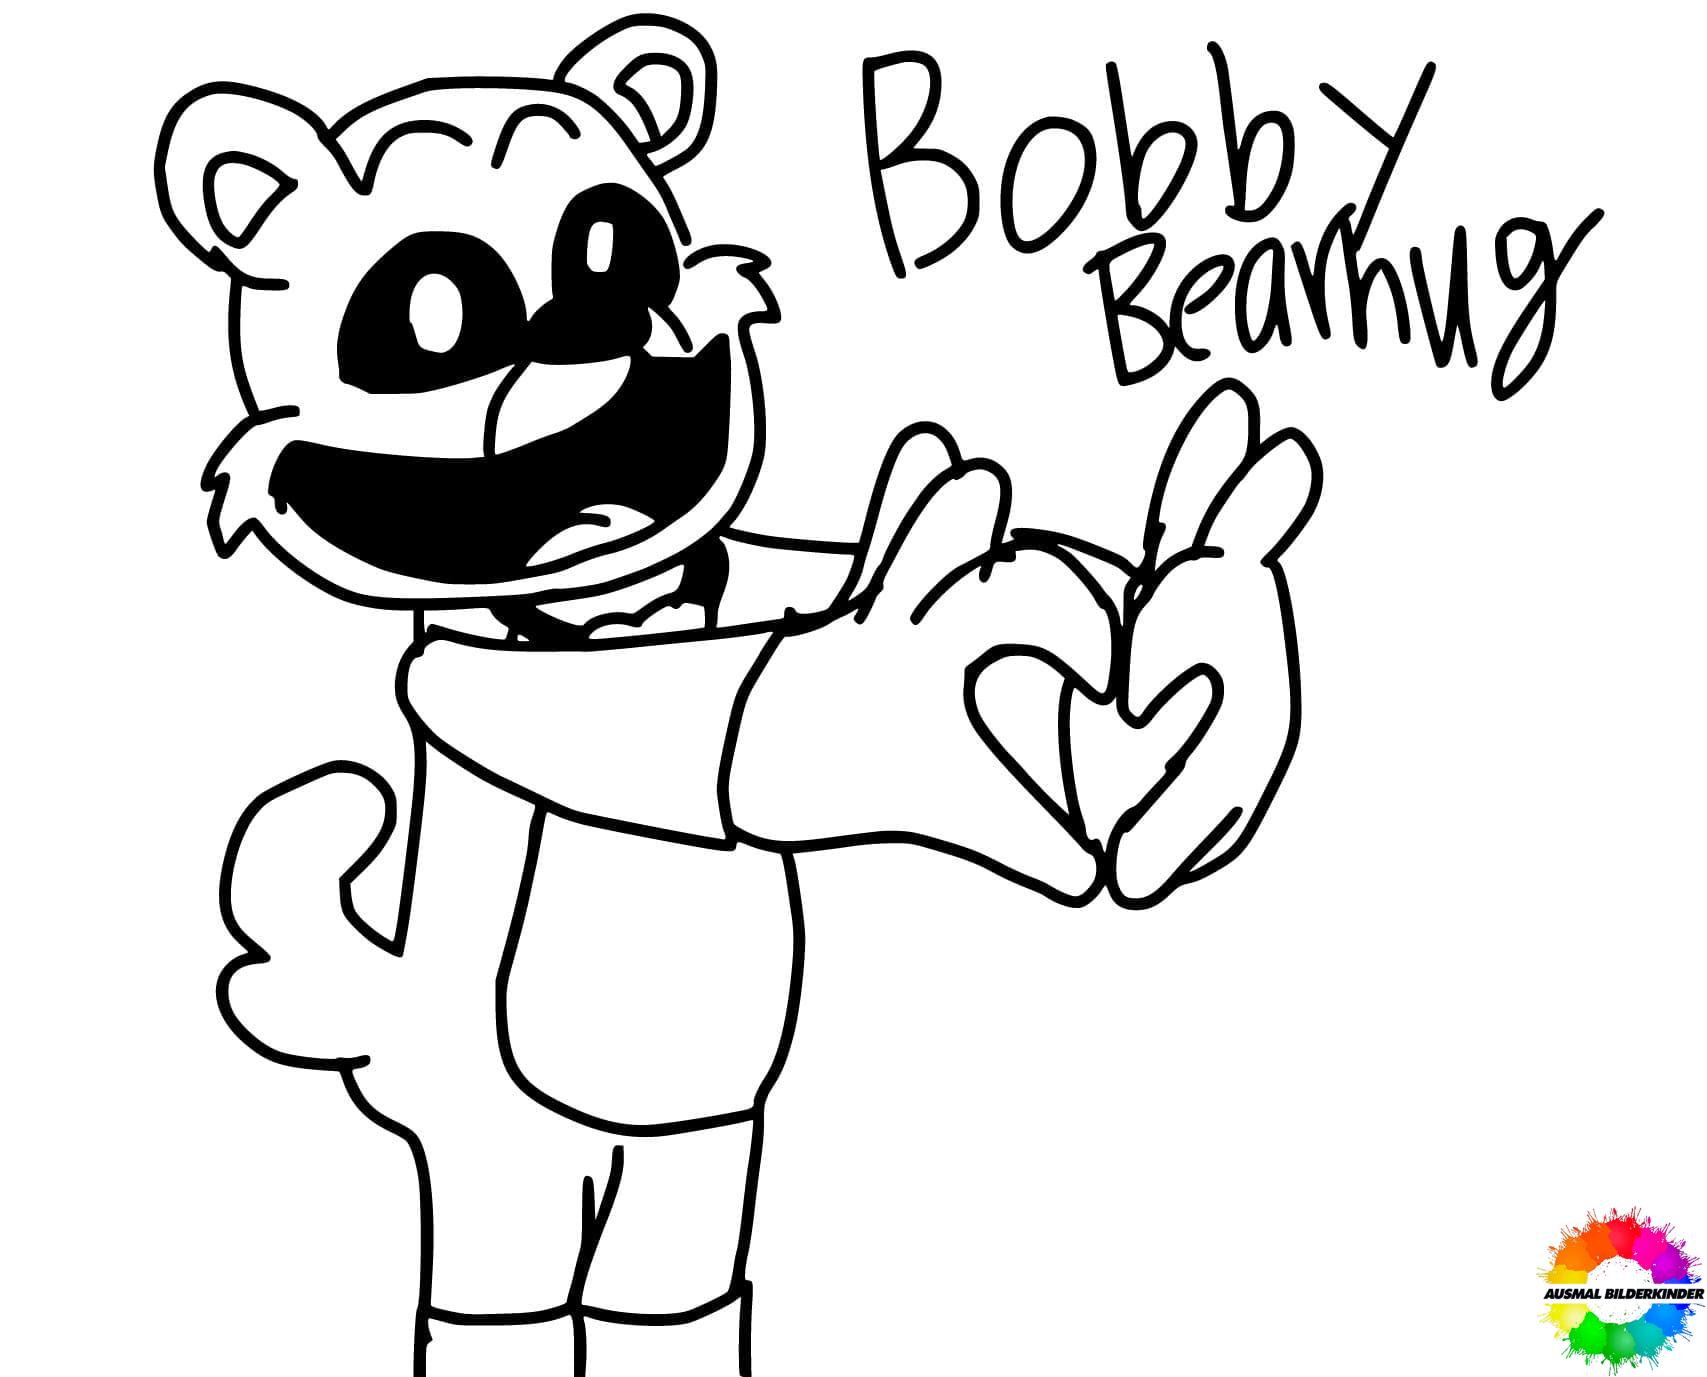 Bobby BearHug 11